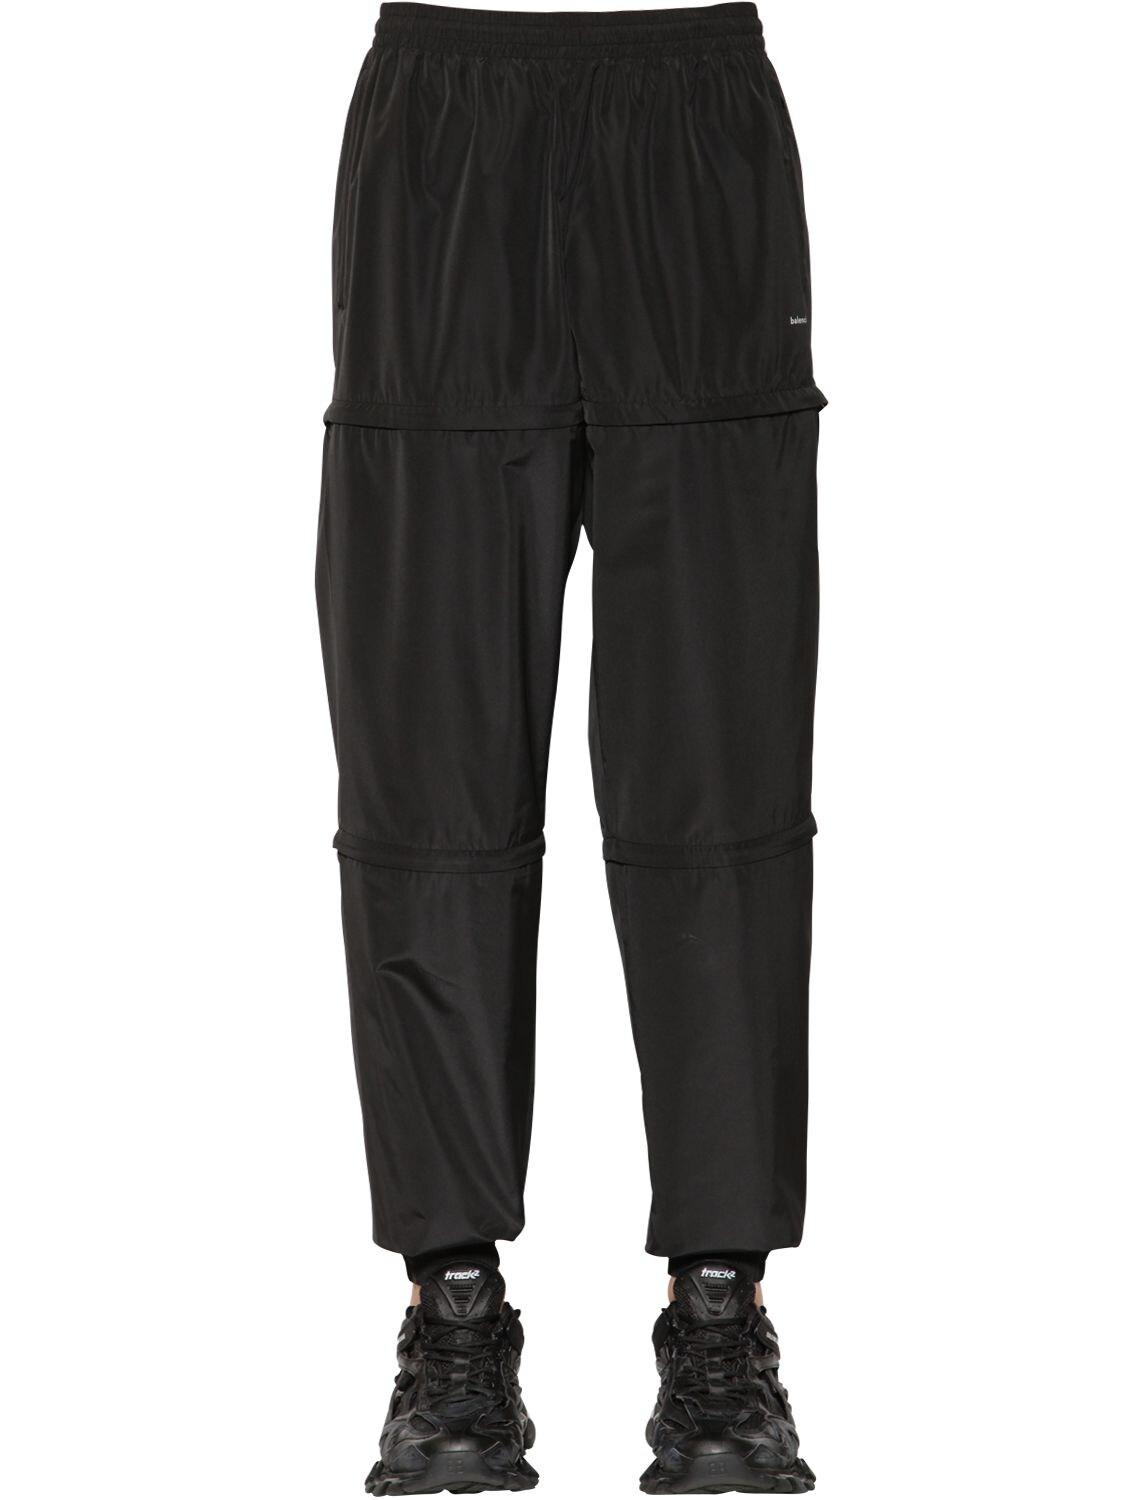 Balenciaga Synthetic Logo Nylon Pants W/zips in Black for Men - Lyst